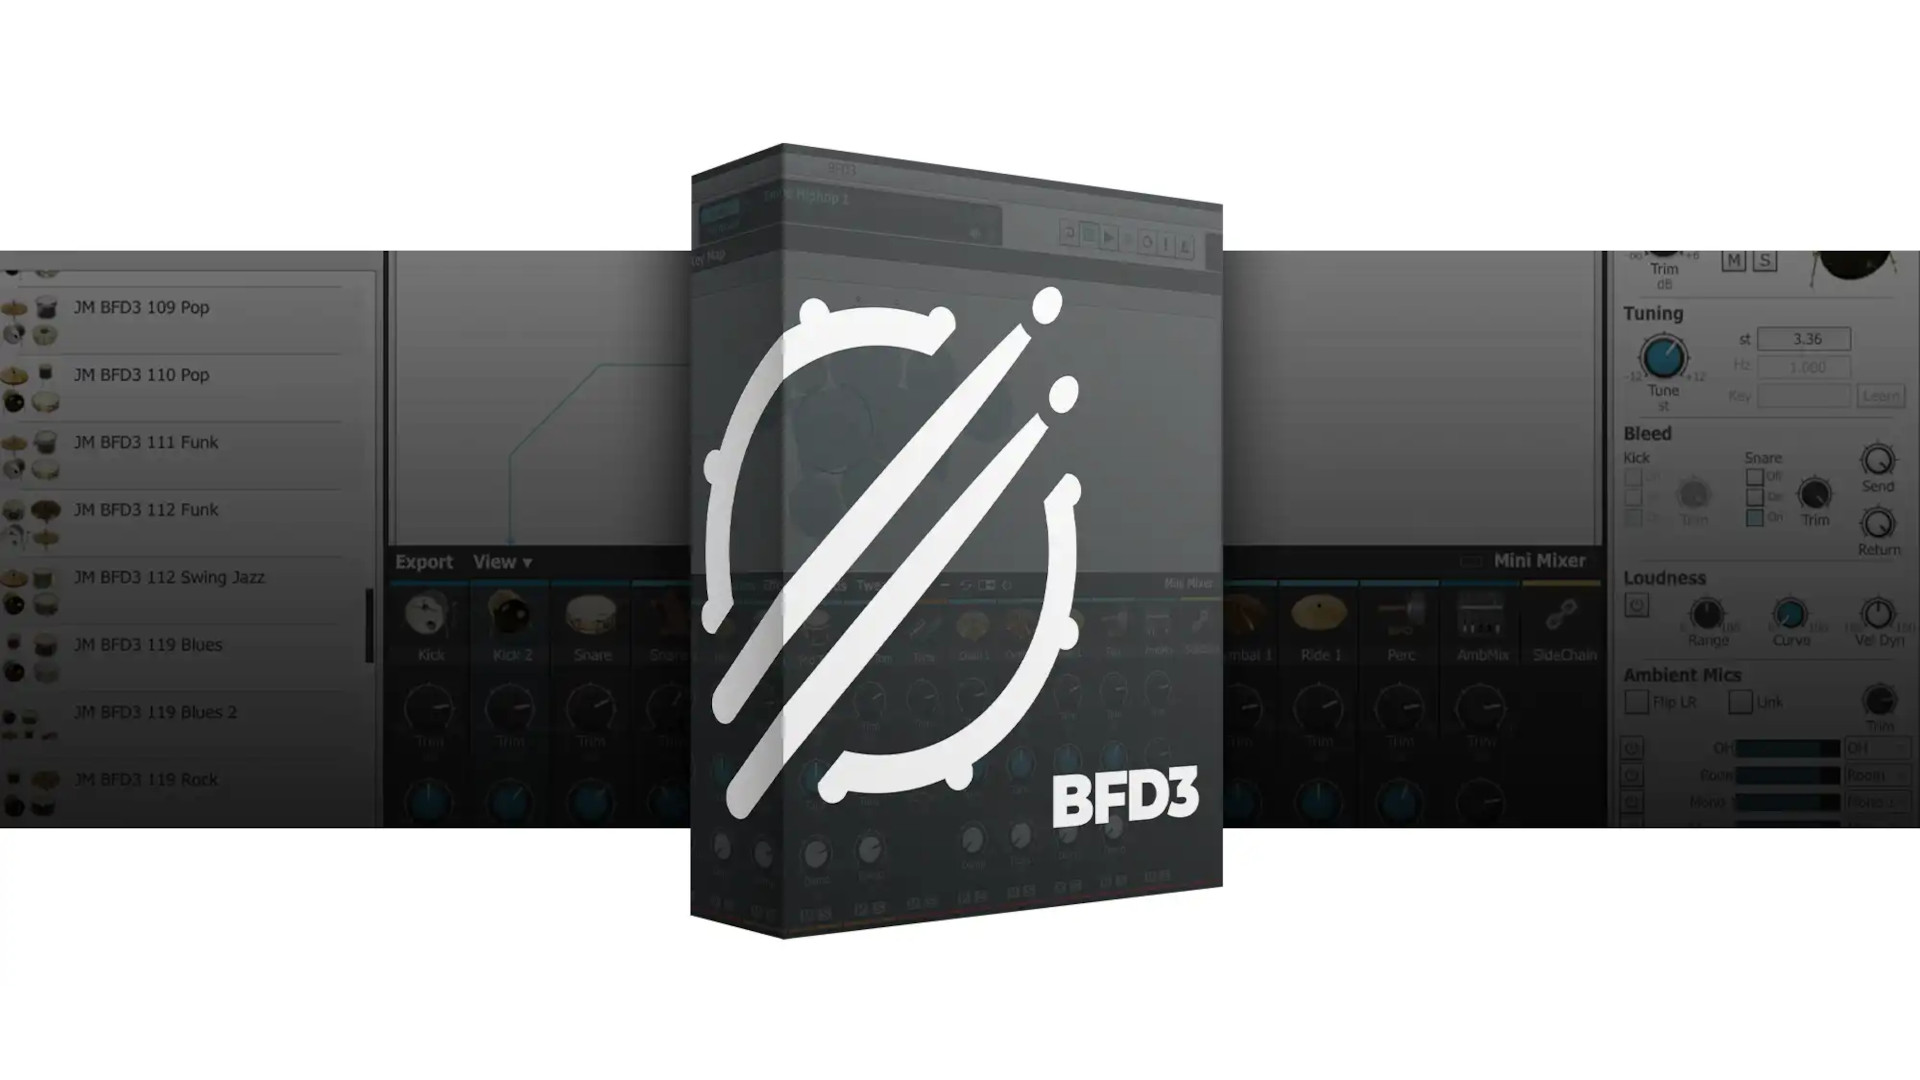 inmusic BFD3 PC/MAC CD Key (100.57$)